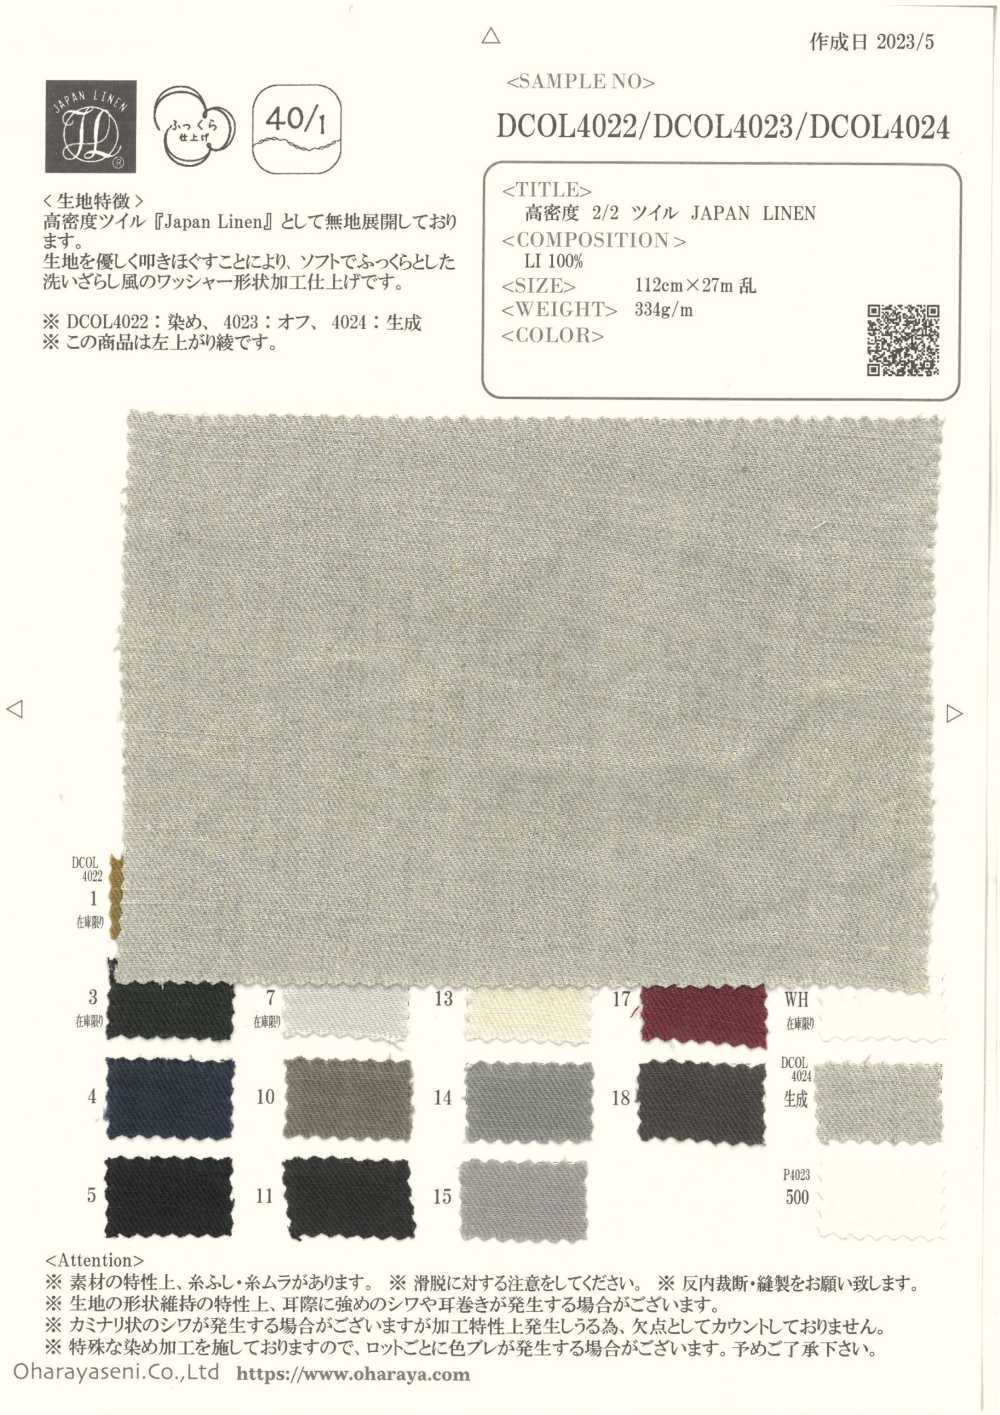 DCOL4024 Sarga 2/2 Alta Densidad LINO JAPÓN[Fabrica Textil] Oharayaseni